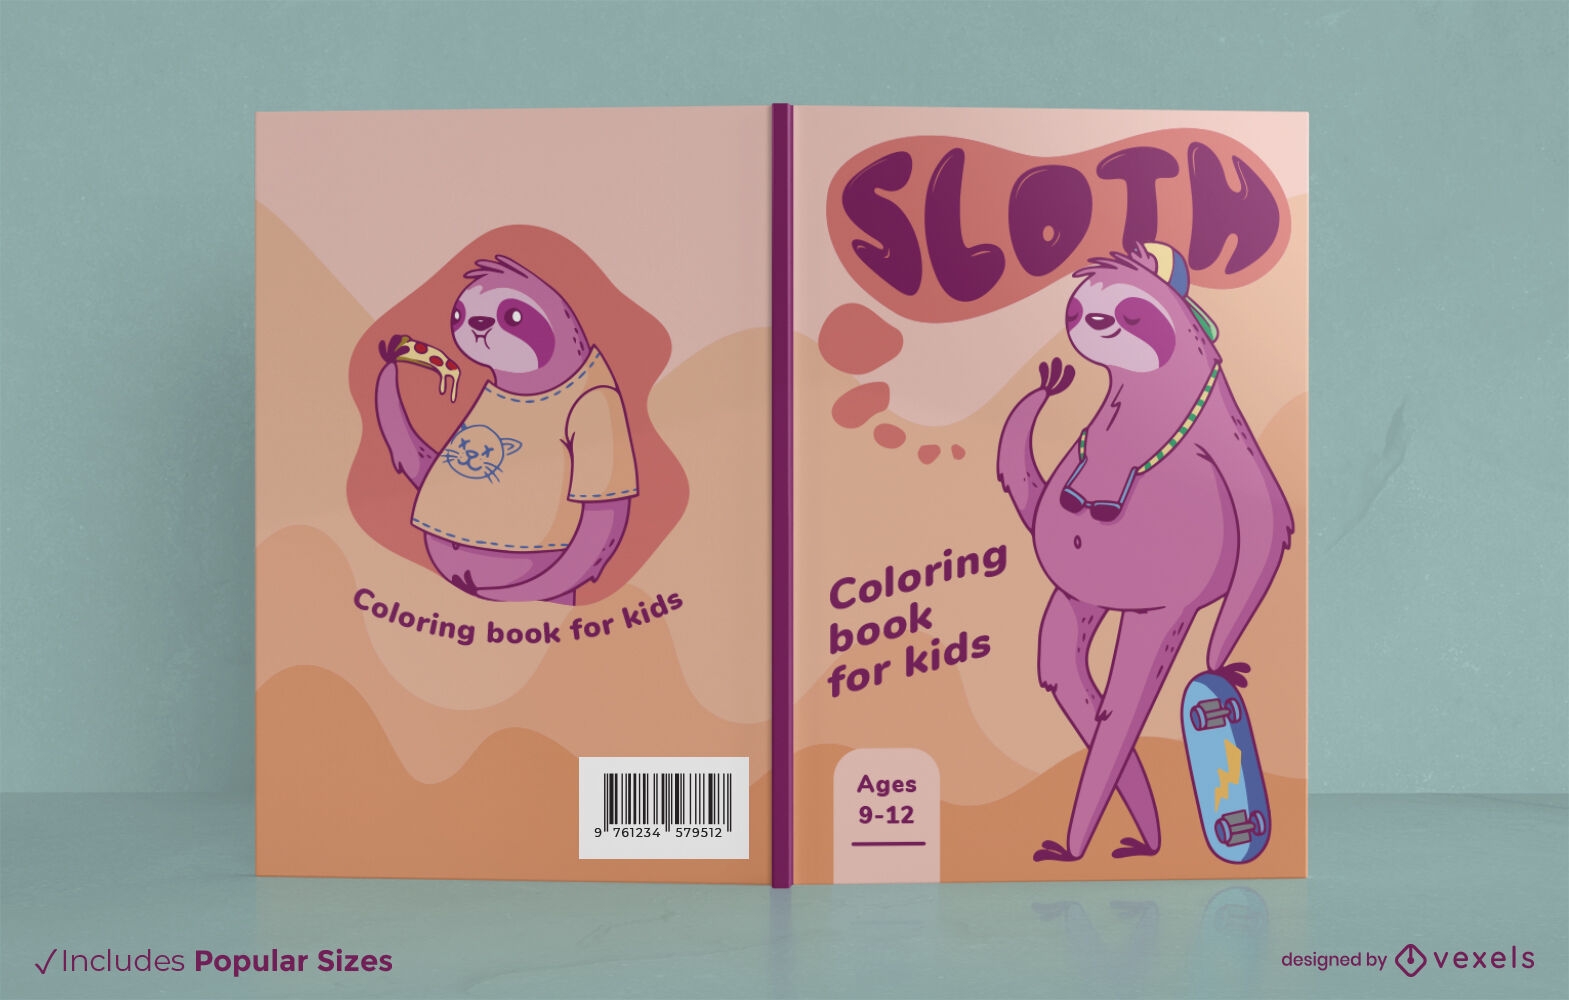 Skater sloth animal book cover design